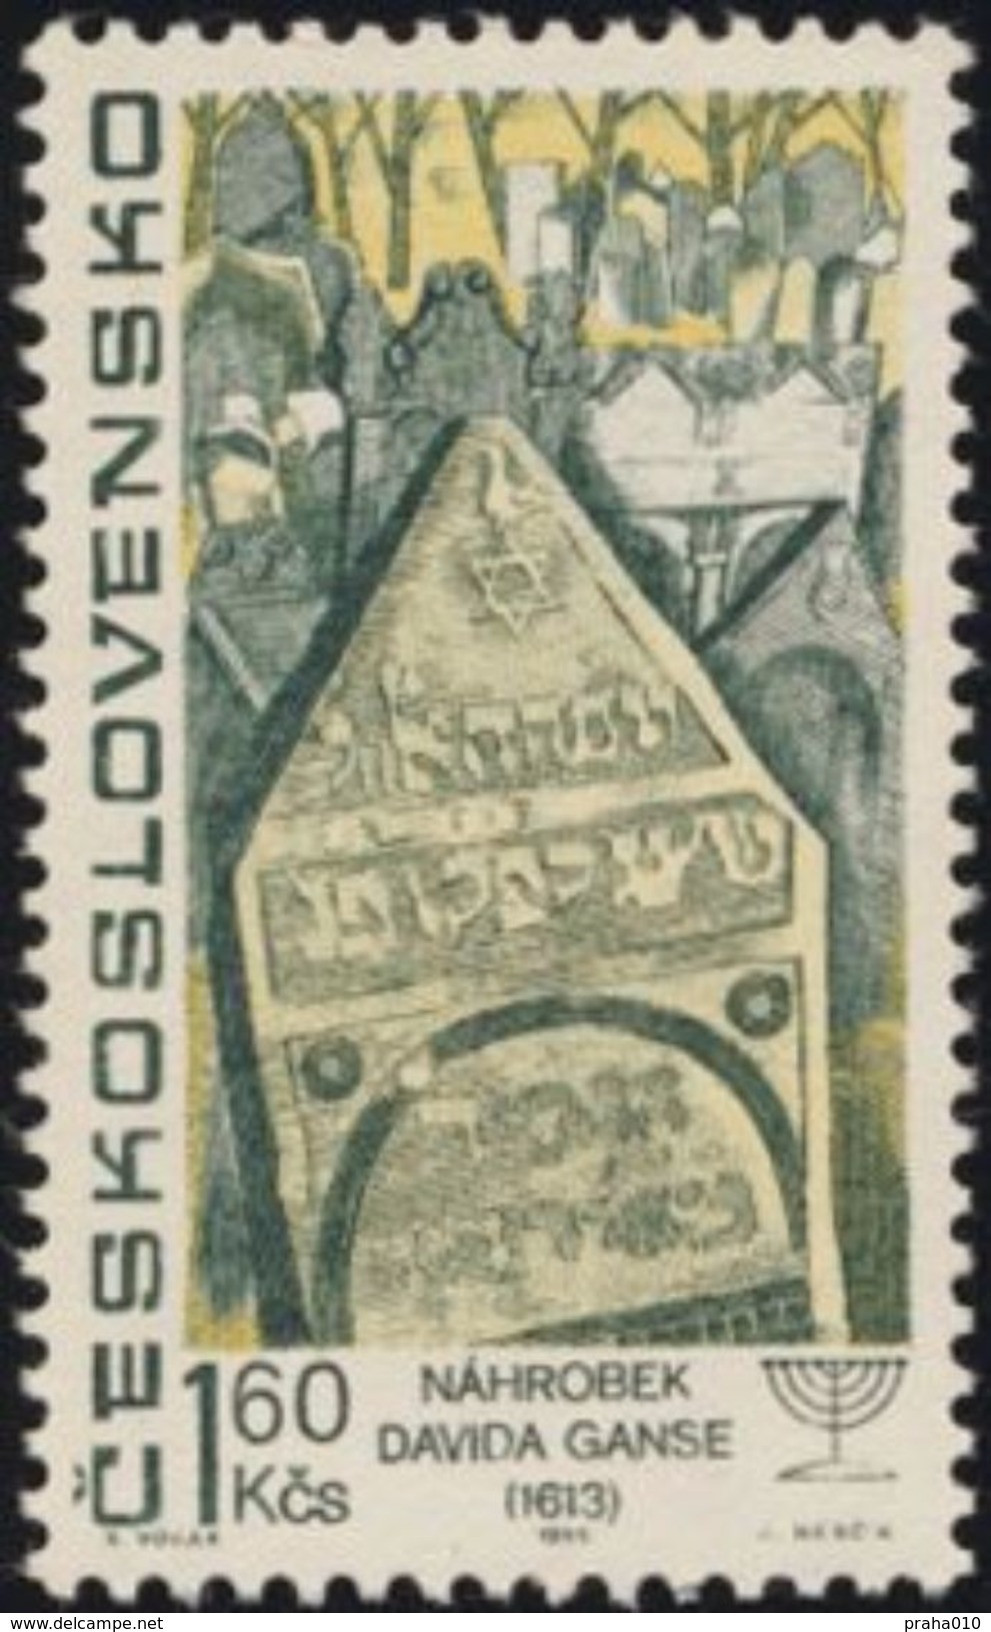 Czechoslovakia / Stamps (1967) 1620: Judaica - The Jewish Cemetery In Prague, Tombstone Of David Gans; Painter: K. Vodak - Judaika, Judentum